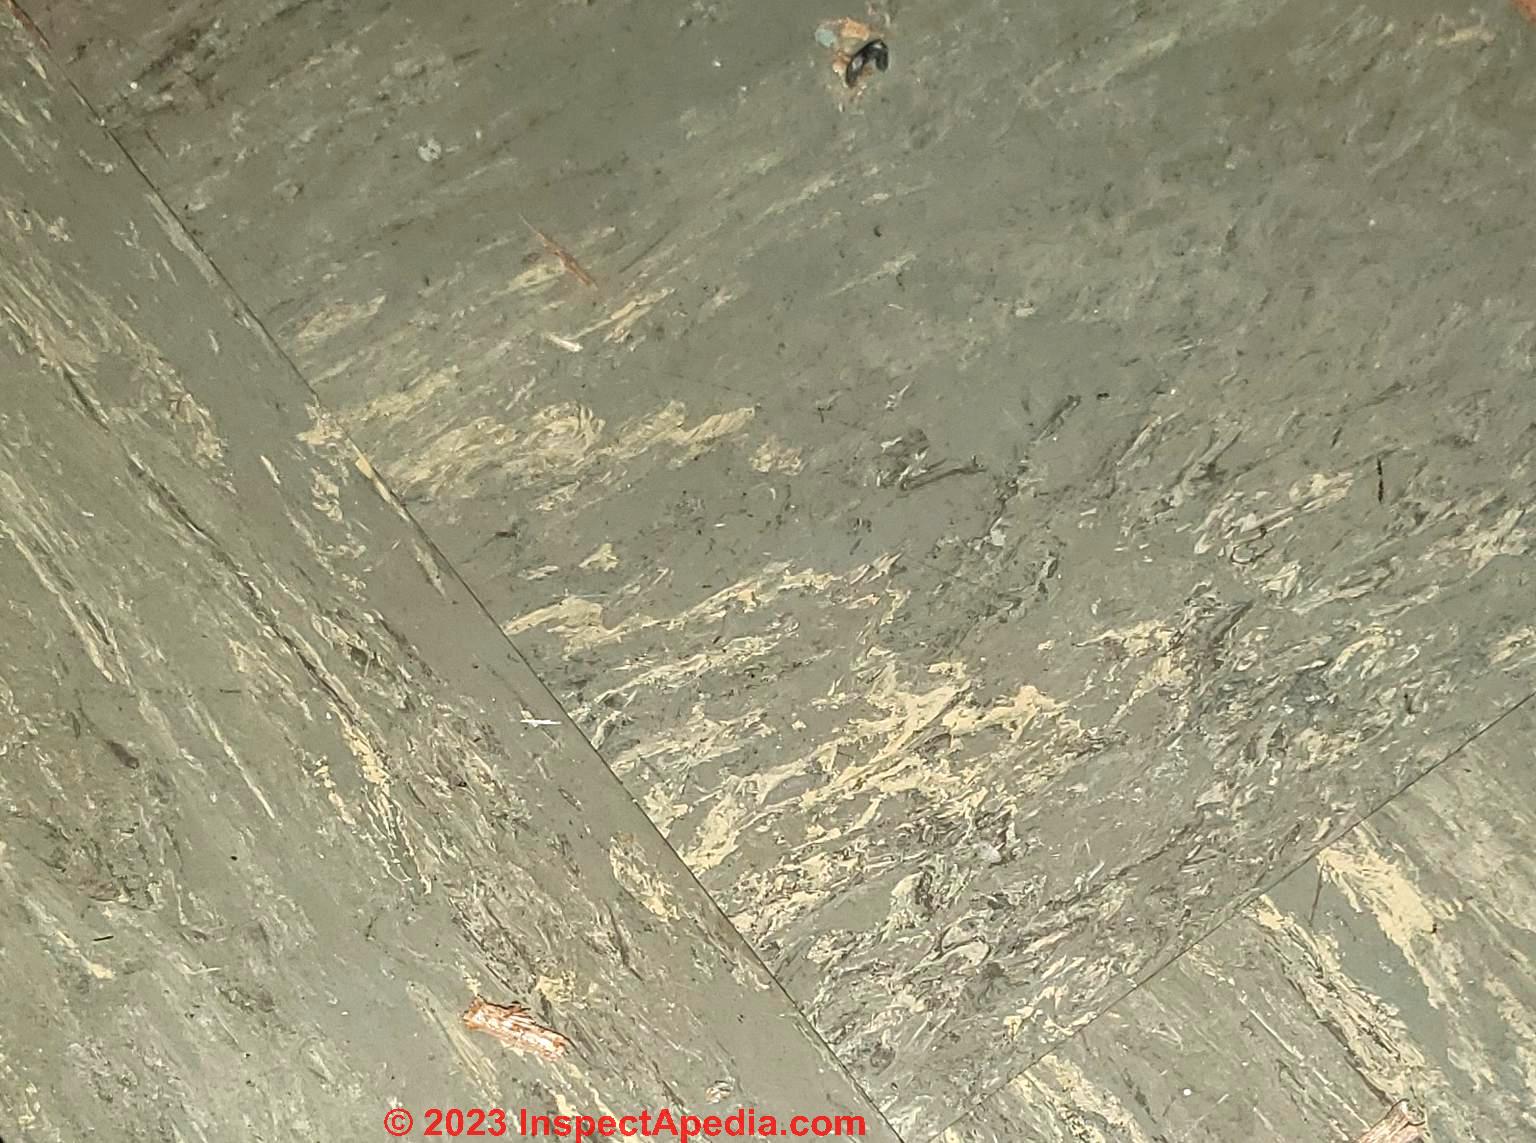 1960s asphalt asbestos floor tile (C) InspectApedia.com Amy